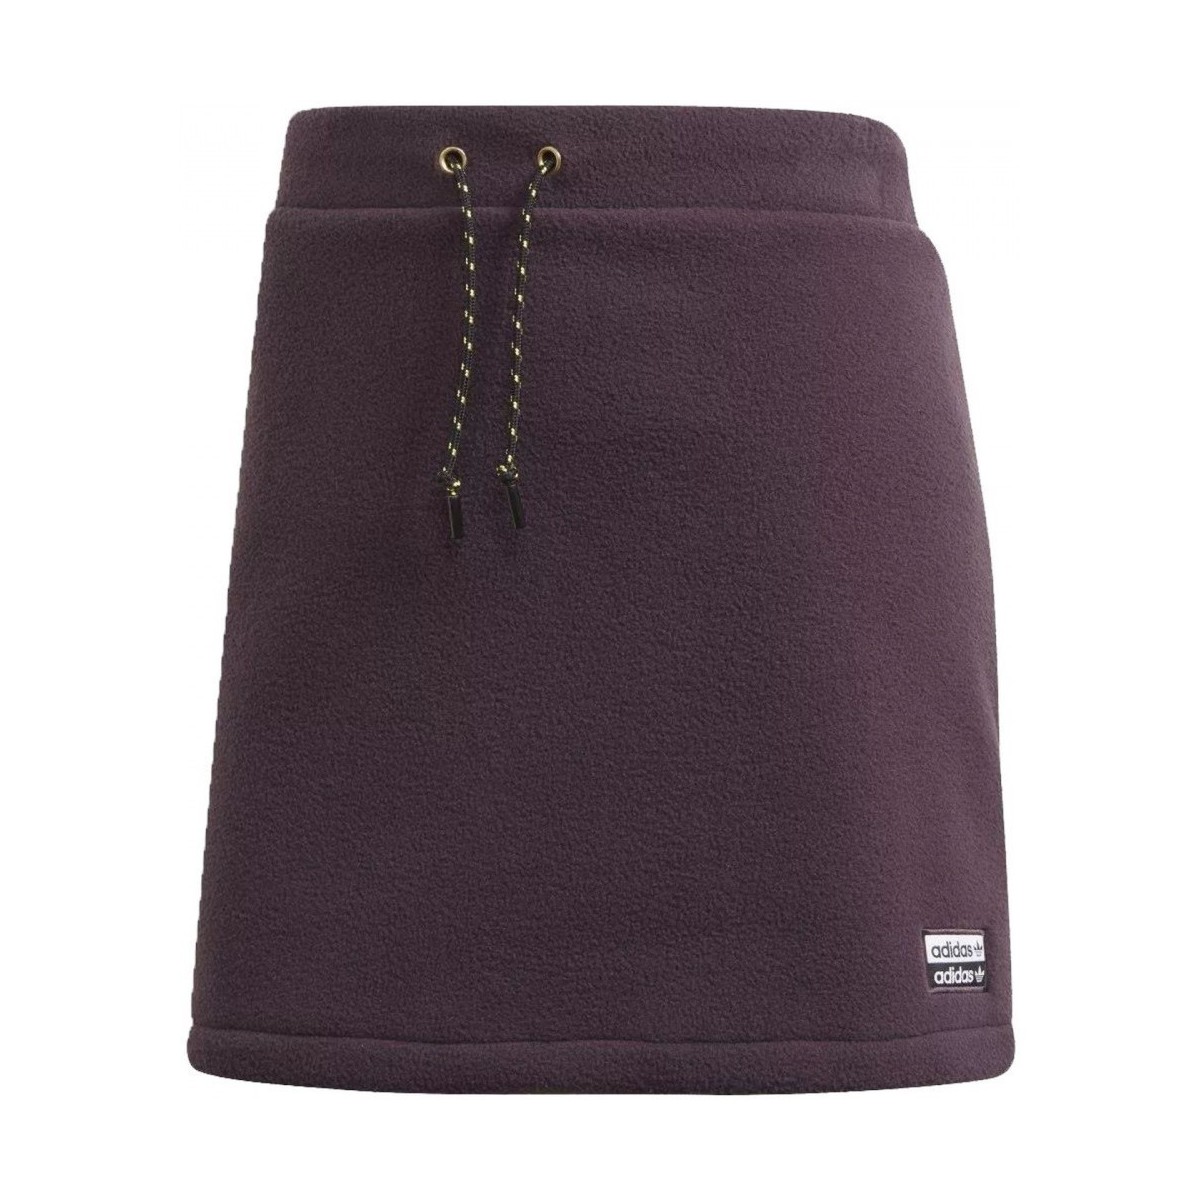 Vêtements Femme Jupes adidas Originals Skirt Violet